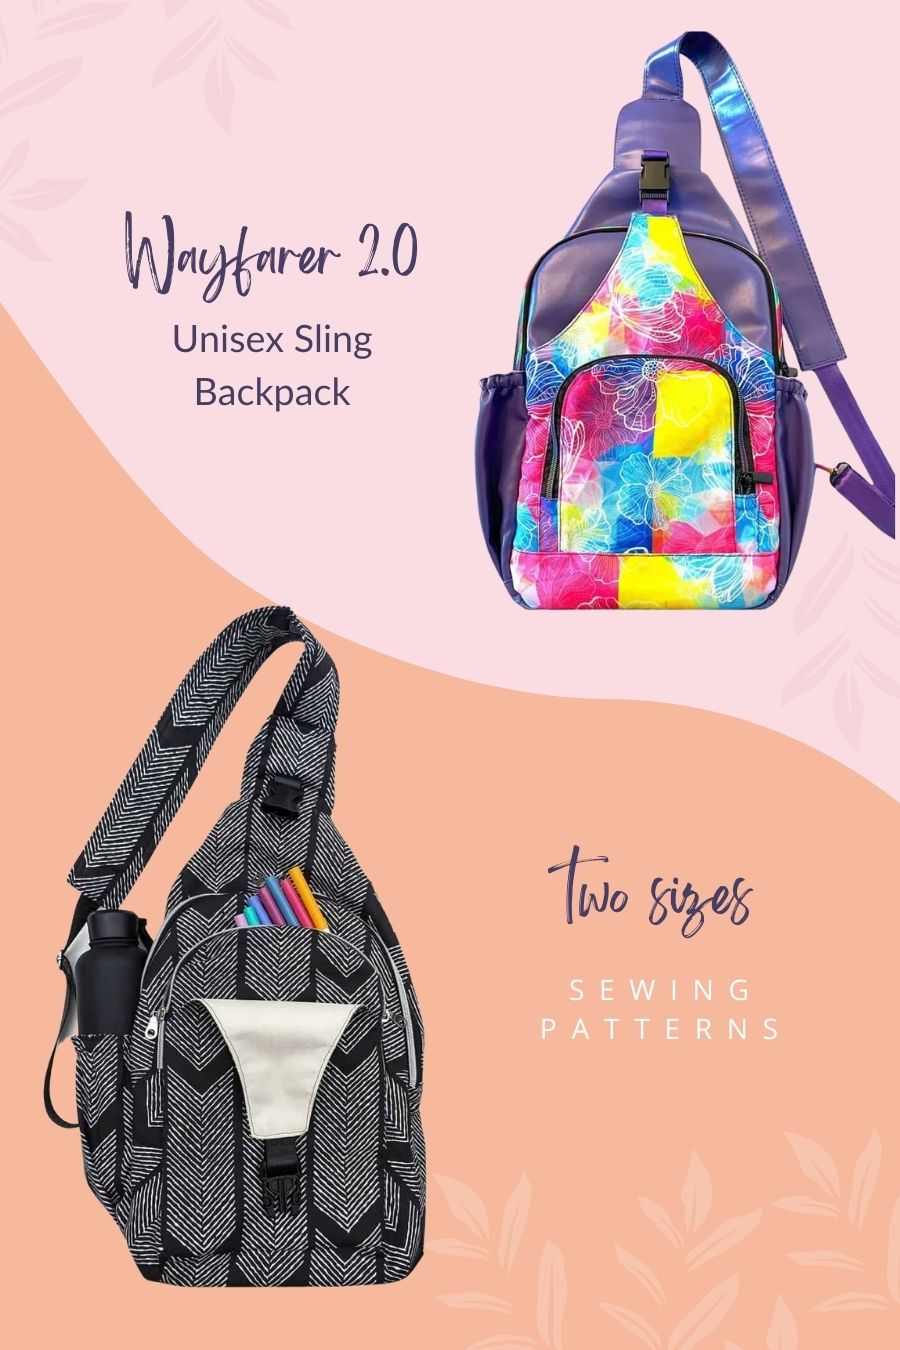 Wayfarer 2.0 Unisex Sling Backpack (2 styles) sewing patterns